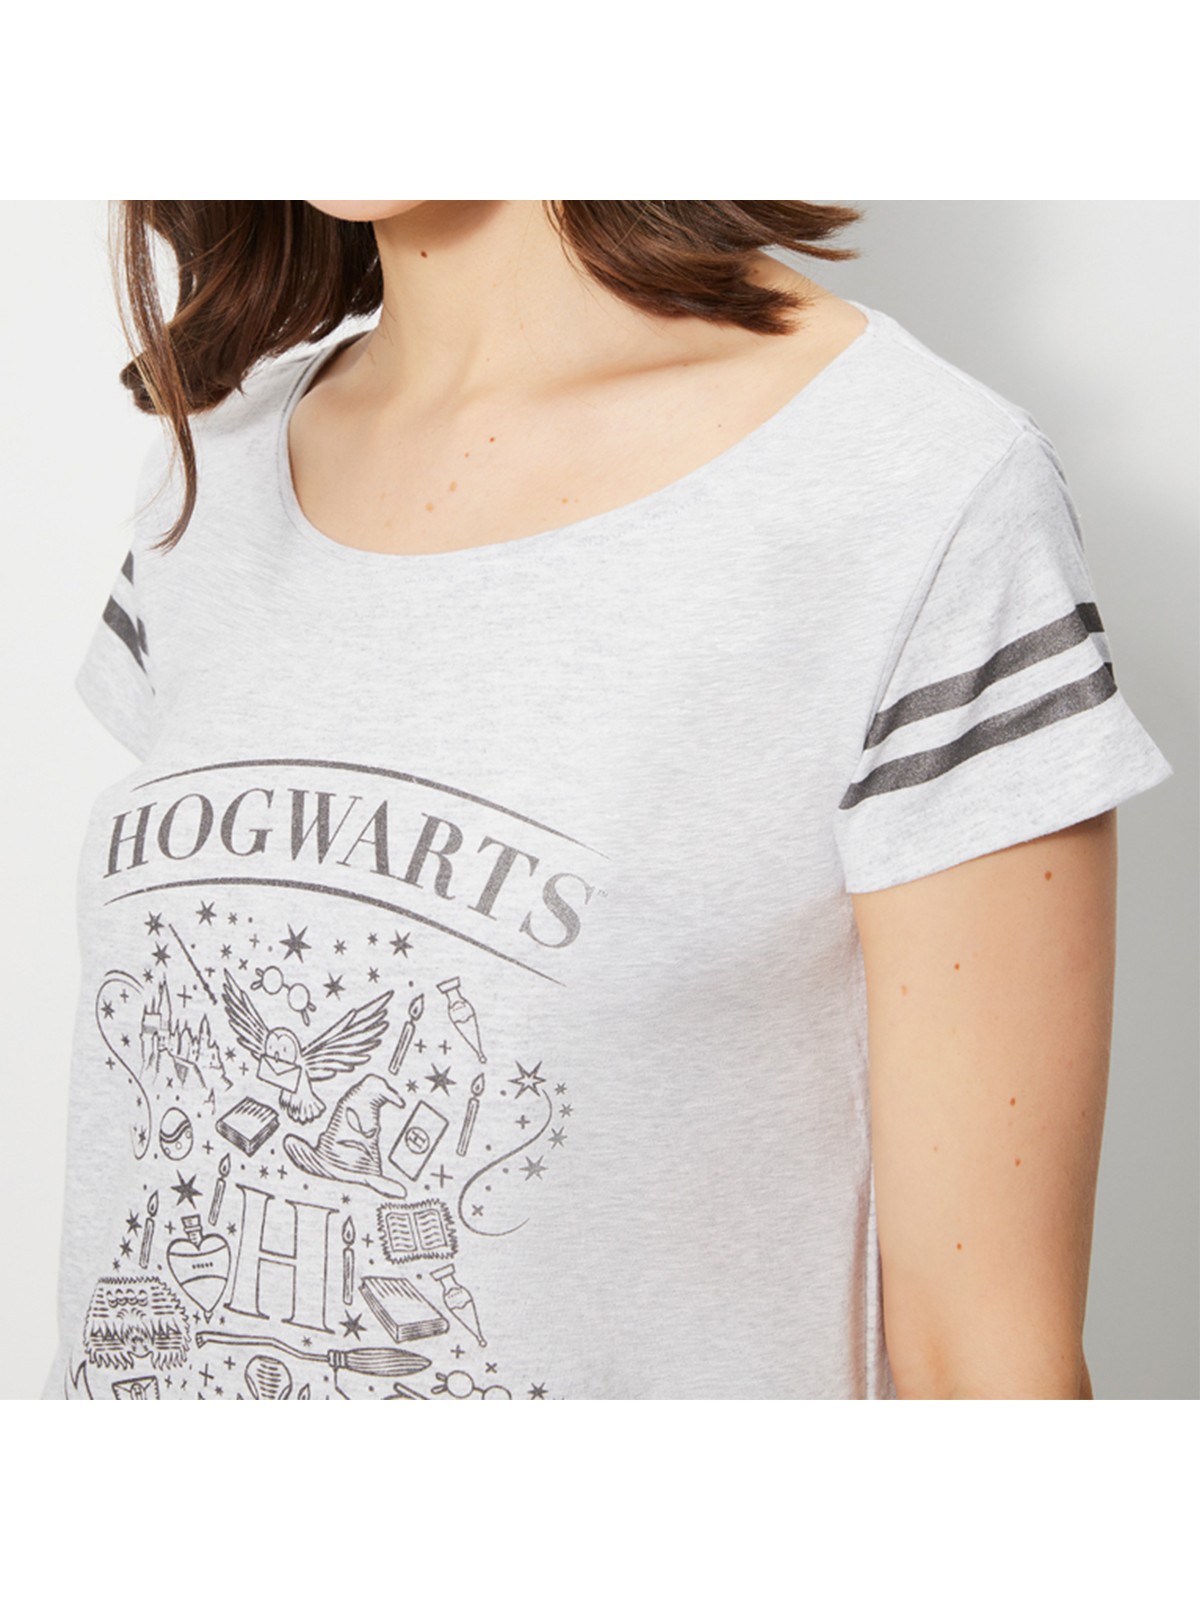 Harry Potter T-shirt short sleeves Women